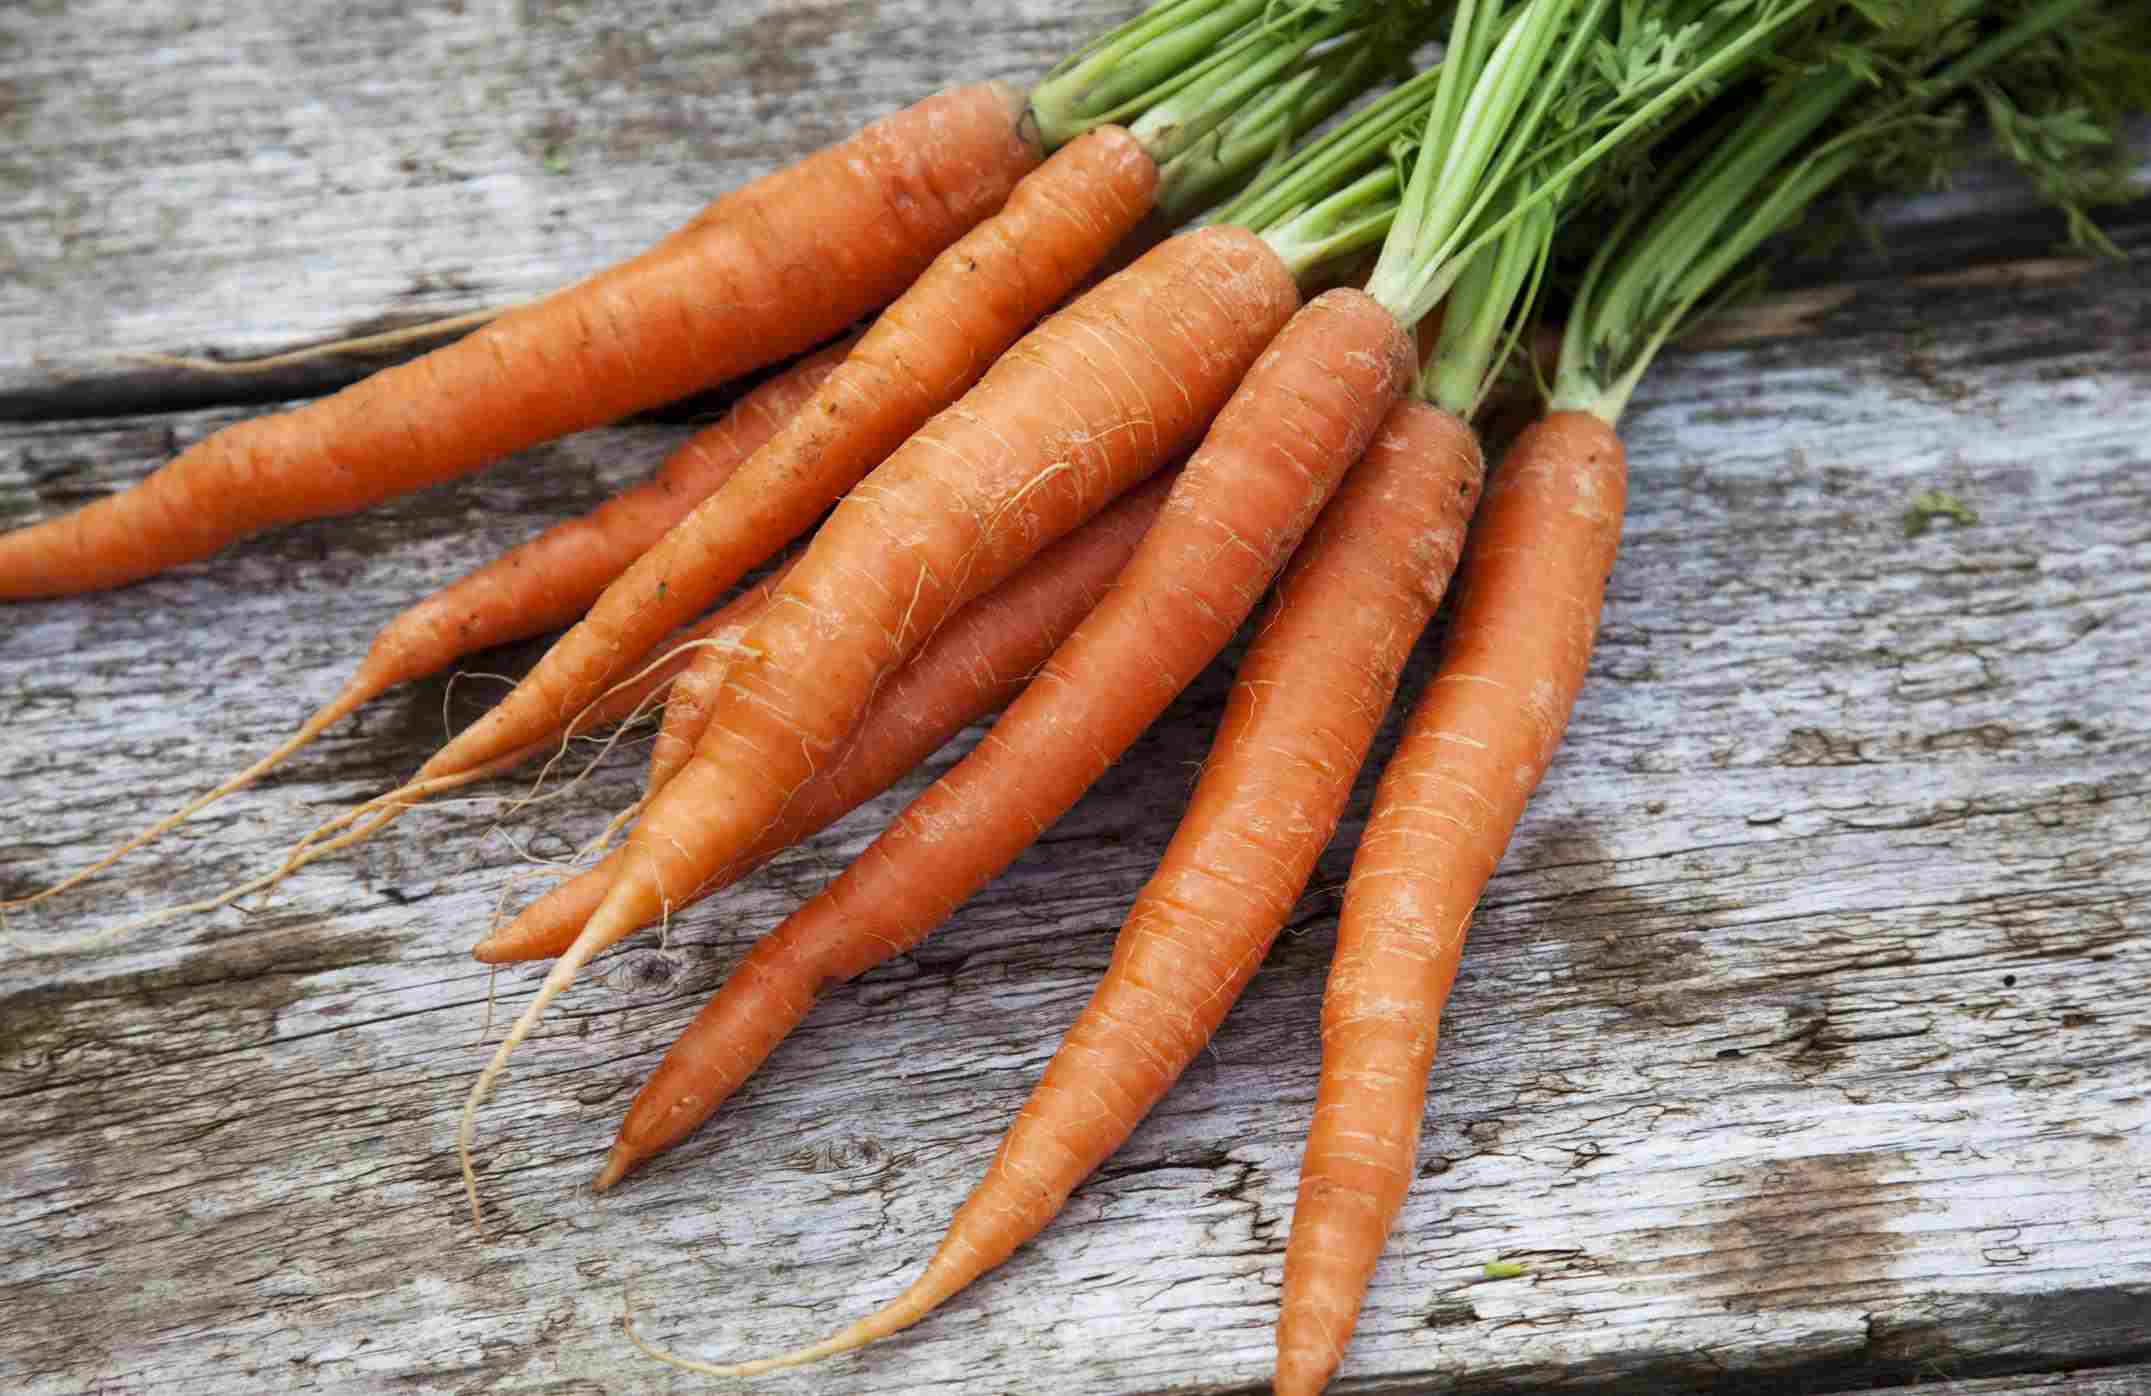 A bundle of fresh carrots